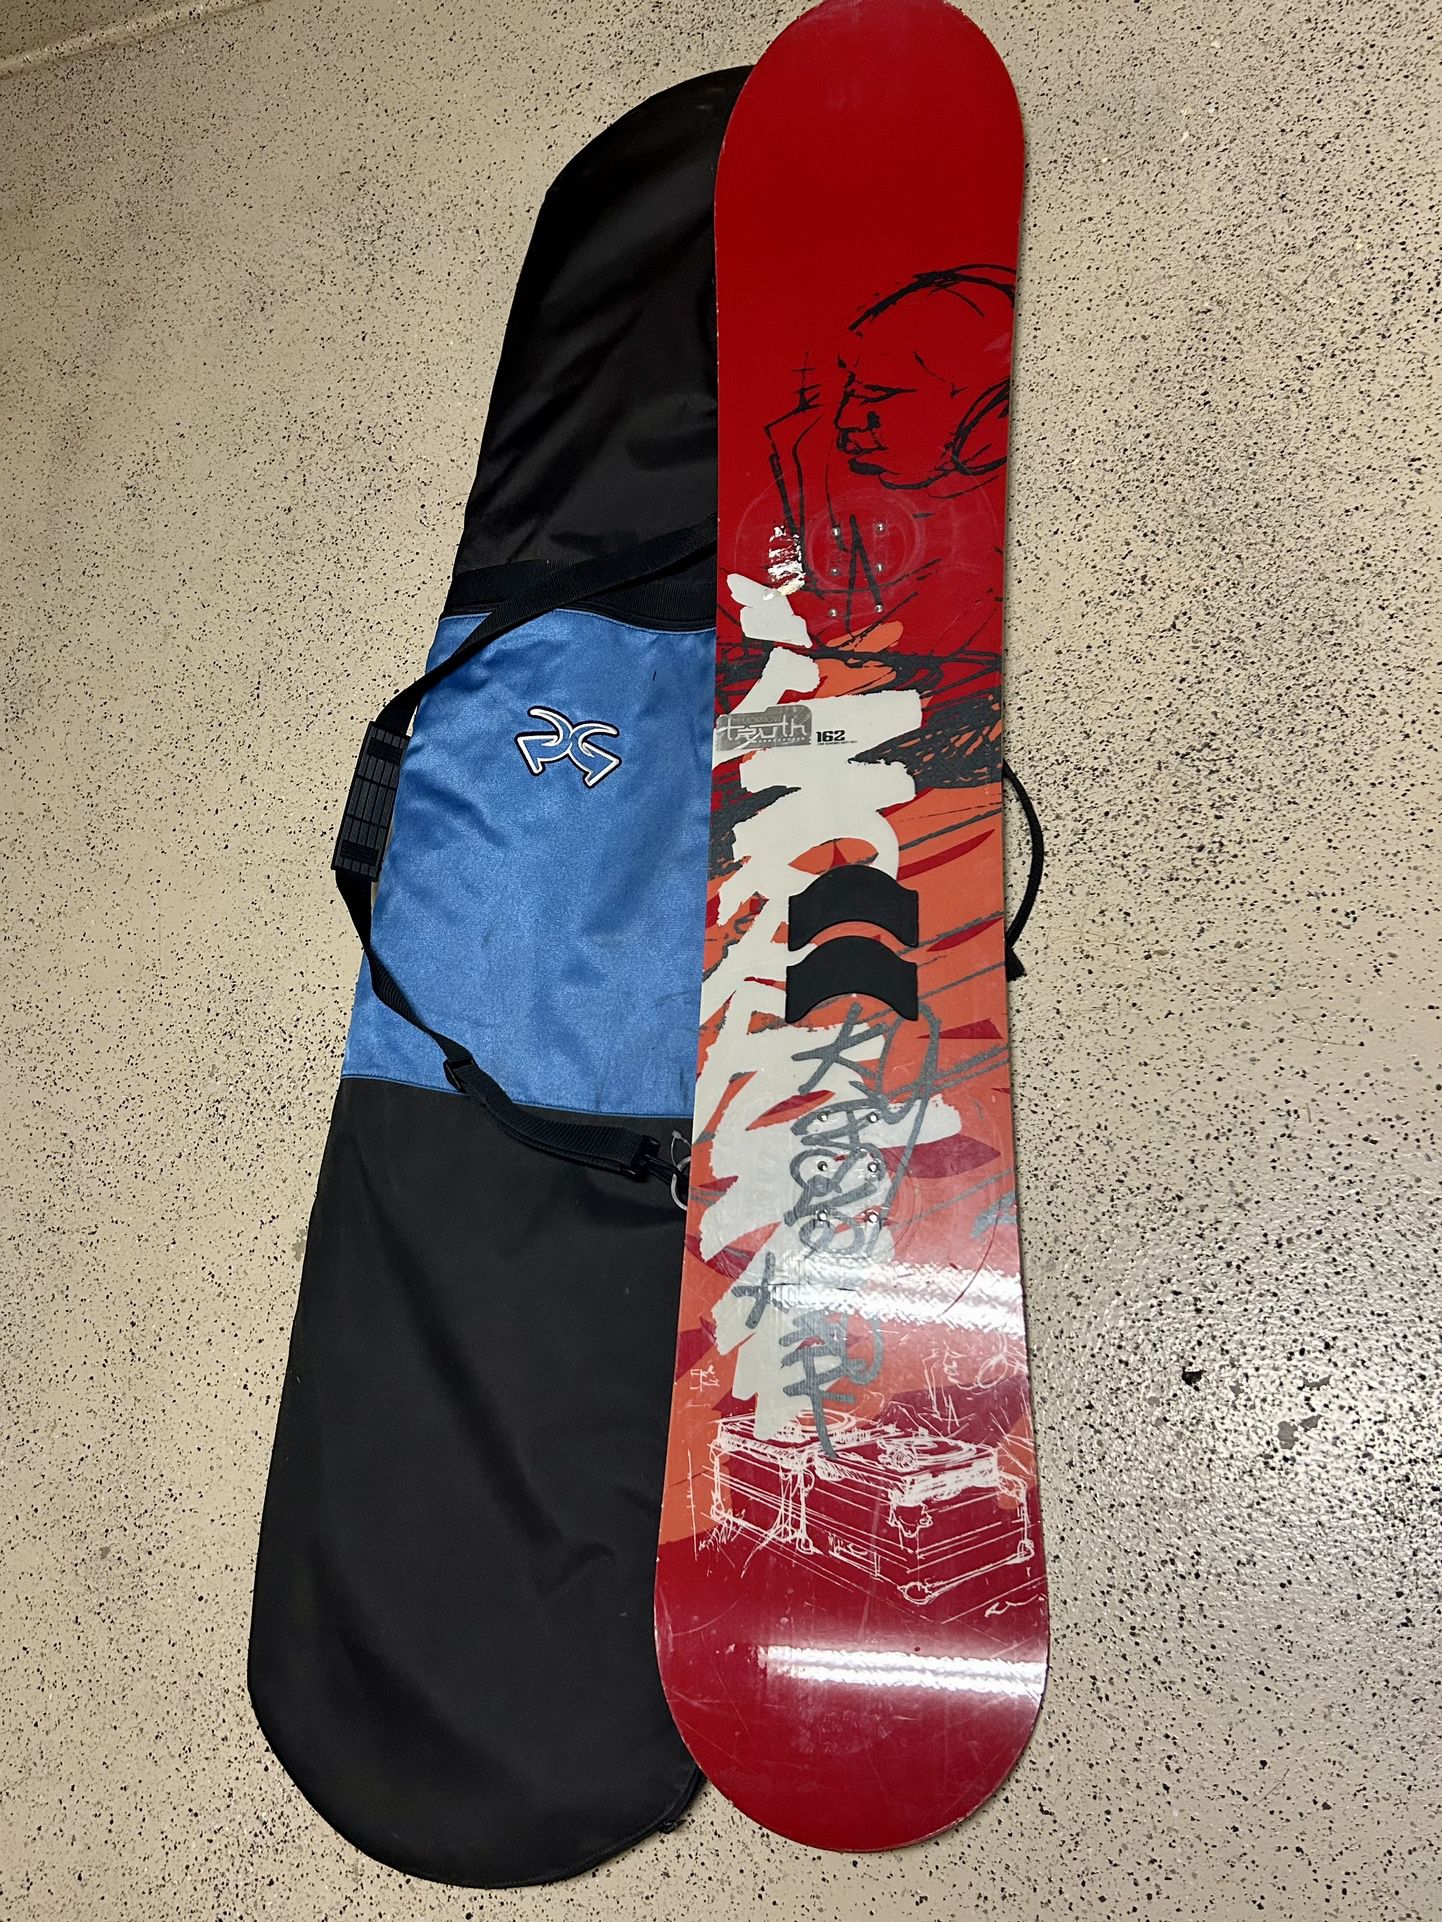 Morrow Snowboard And Bag $110